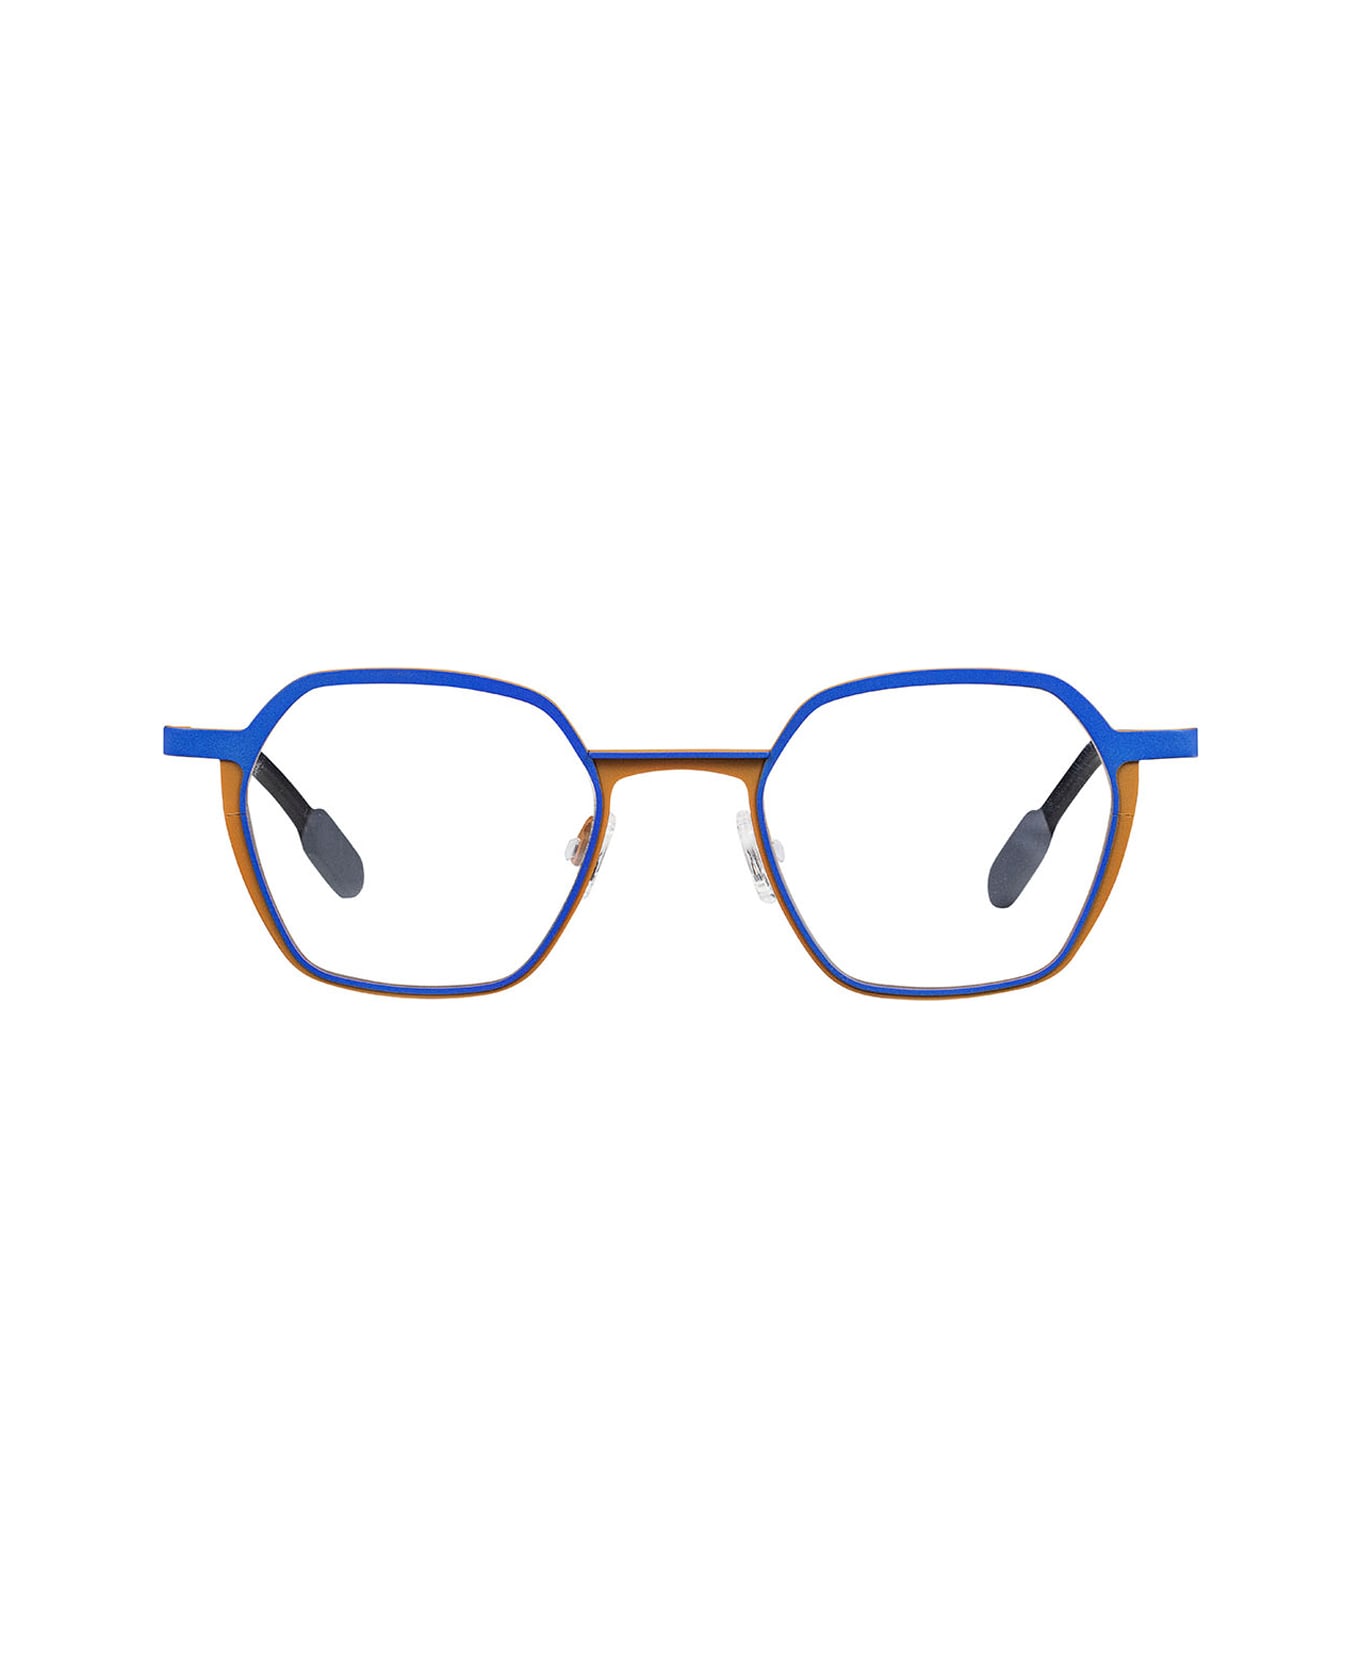 Matttew Lungo Glasses - Blu